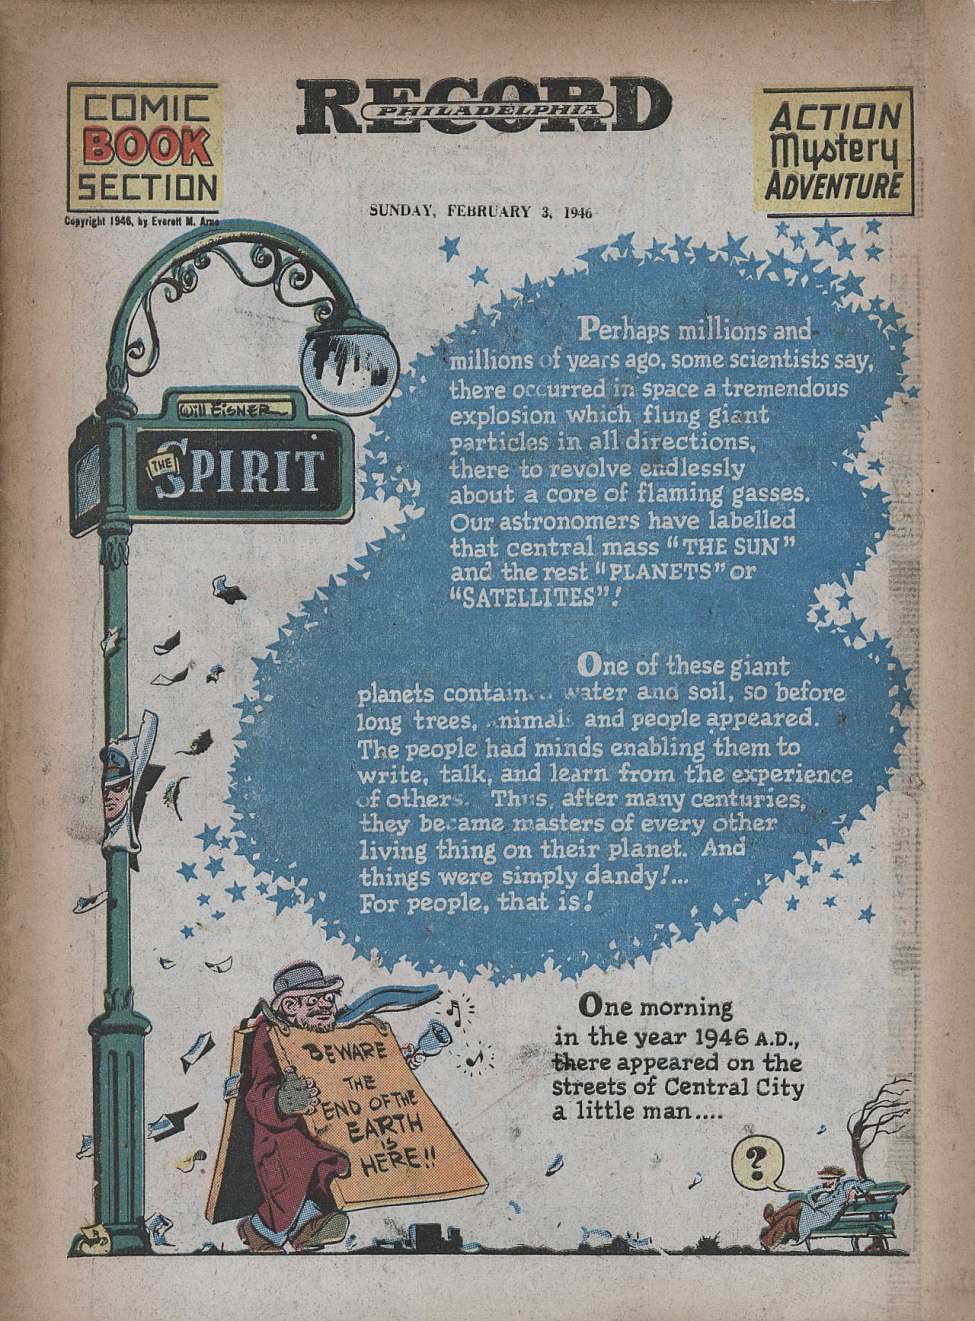 Comic Book Cover For The Spirit (1946-02-03) - Philadelphia Record